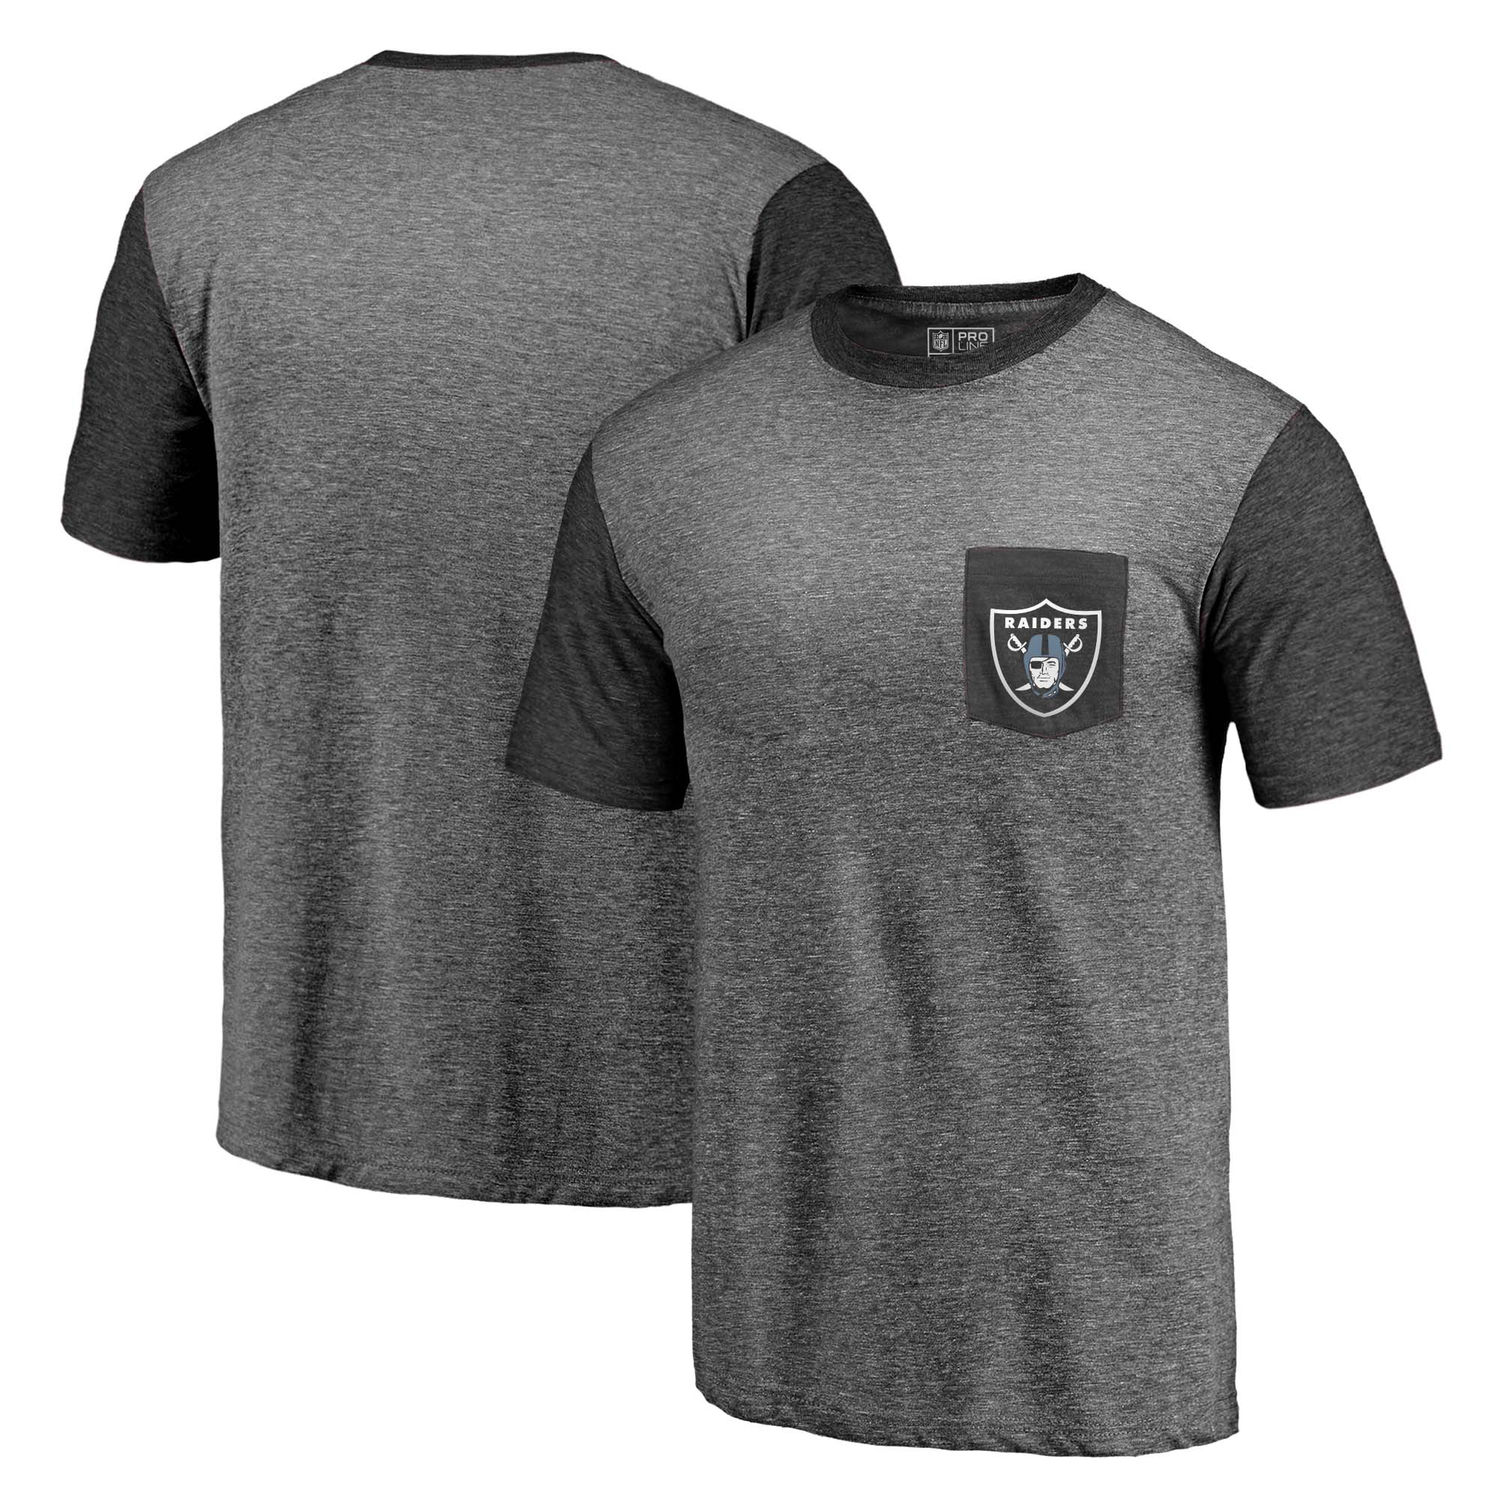 Men's Oakland Raiders NFL Pro Line by Fanatics Branded Heathered Gray-Black Refresh Pocket T-Shirt